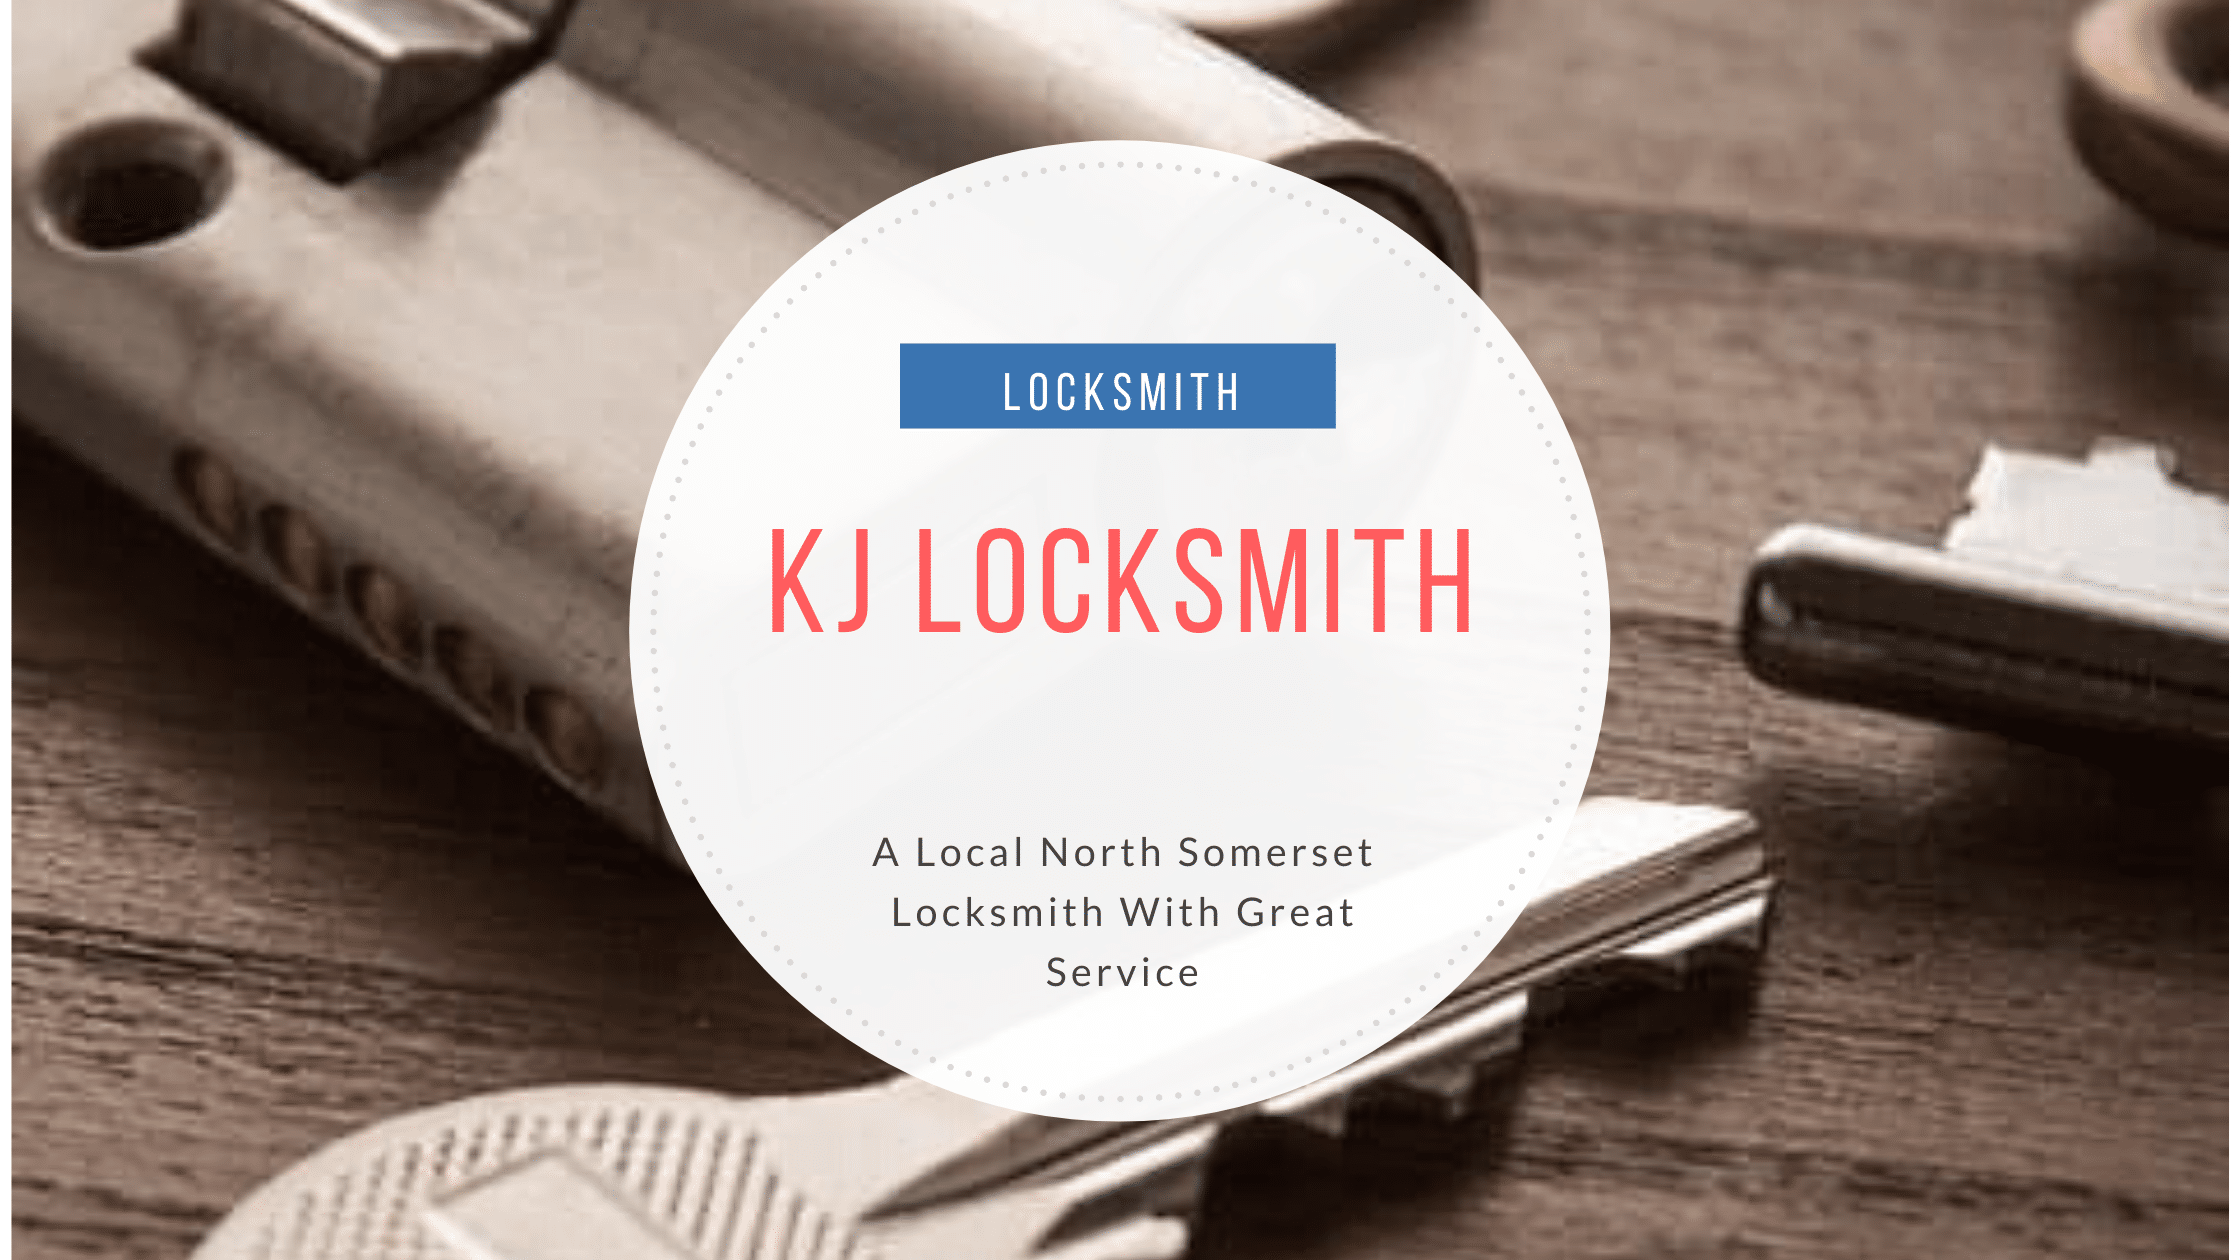 KJ Locksmith: A Local North Somerset Locksmith with Great Service